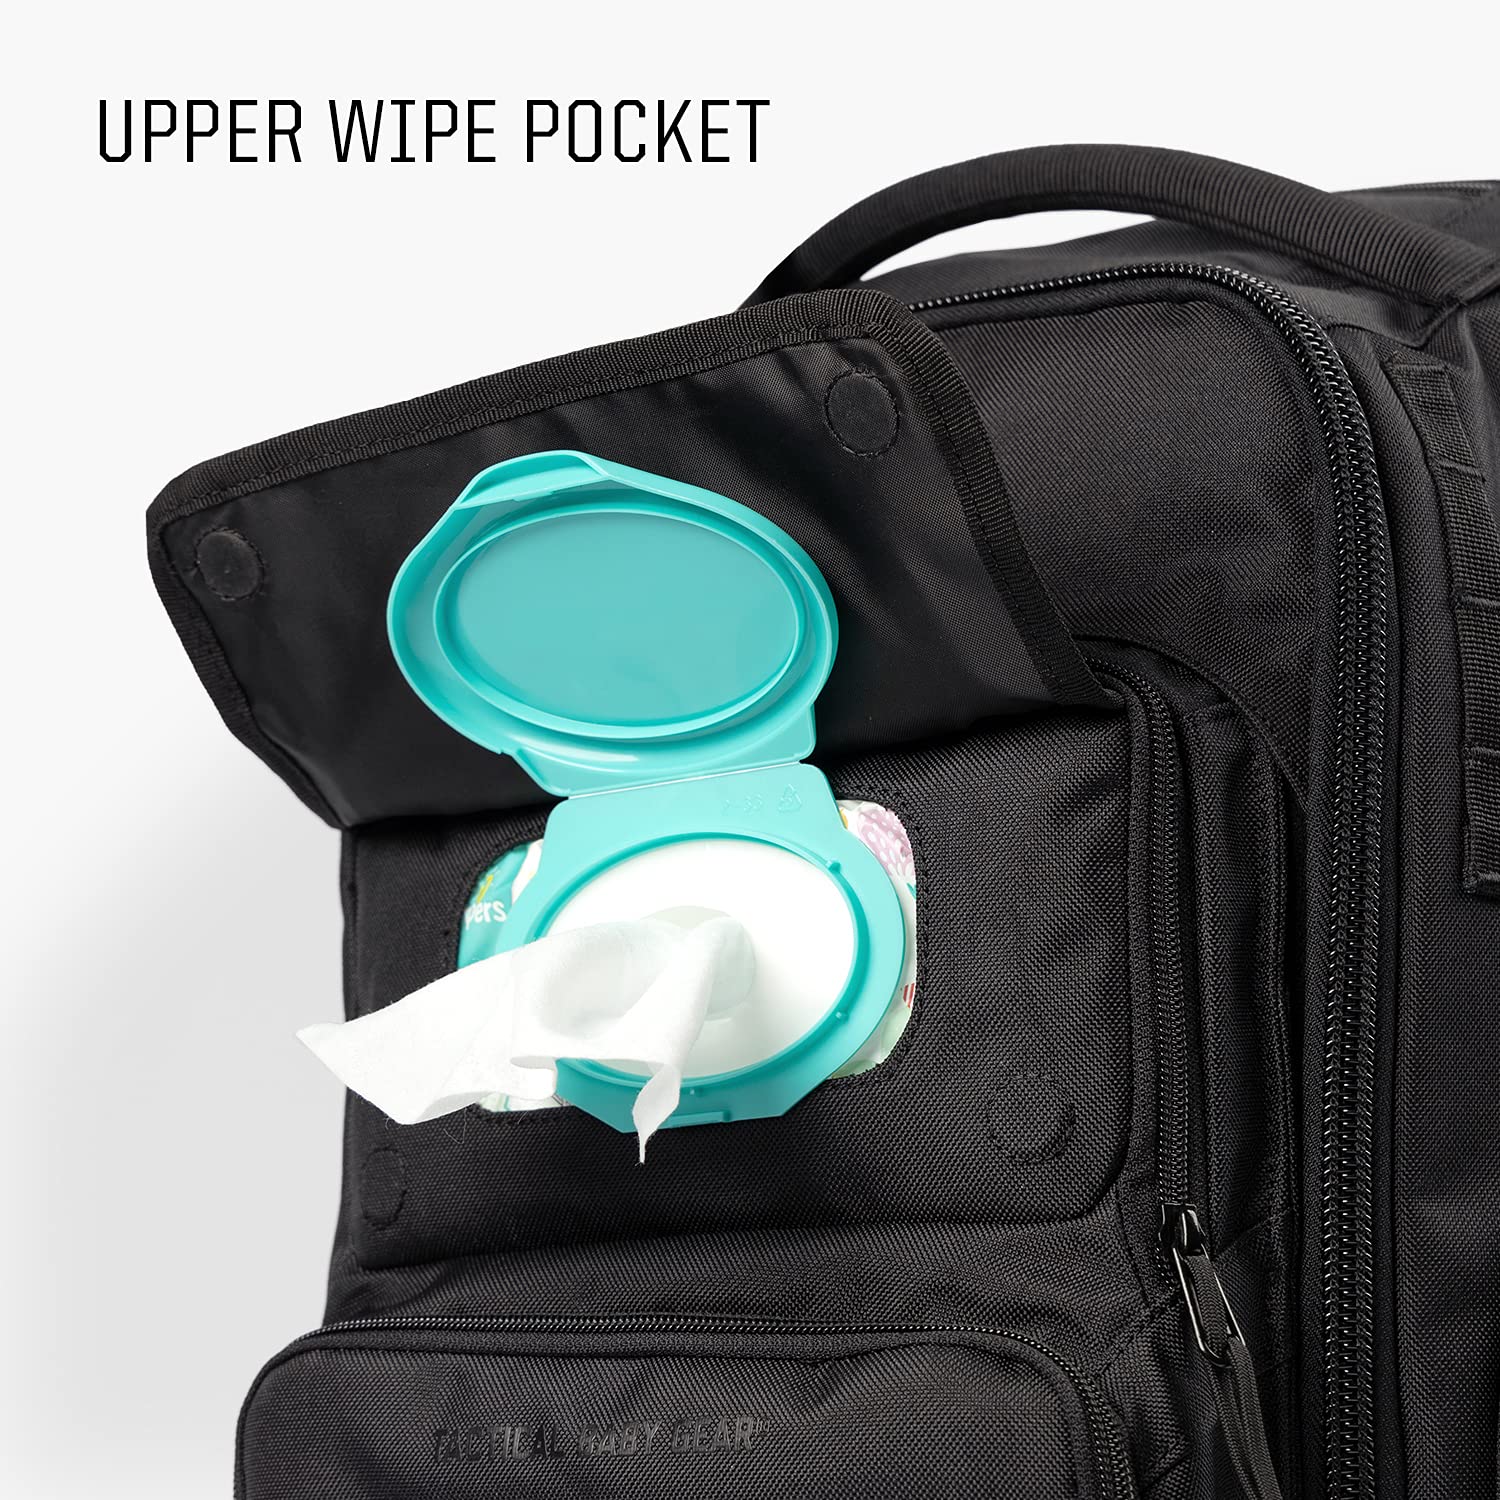 Tactical Baby Gear TBG - MOD Diaper Bag Backpack for Men w/Changing Mat - Modular Panel System (Black)